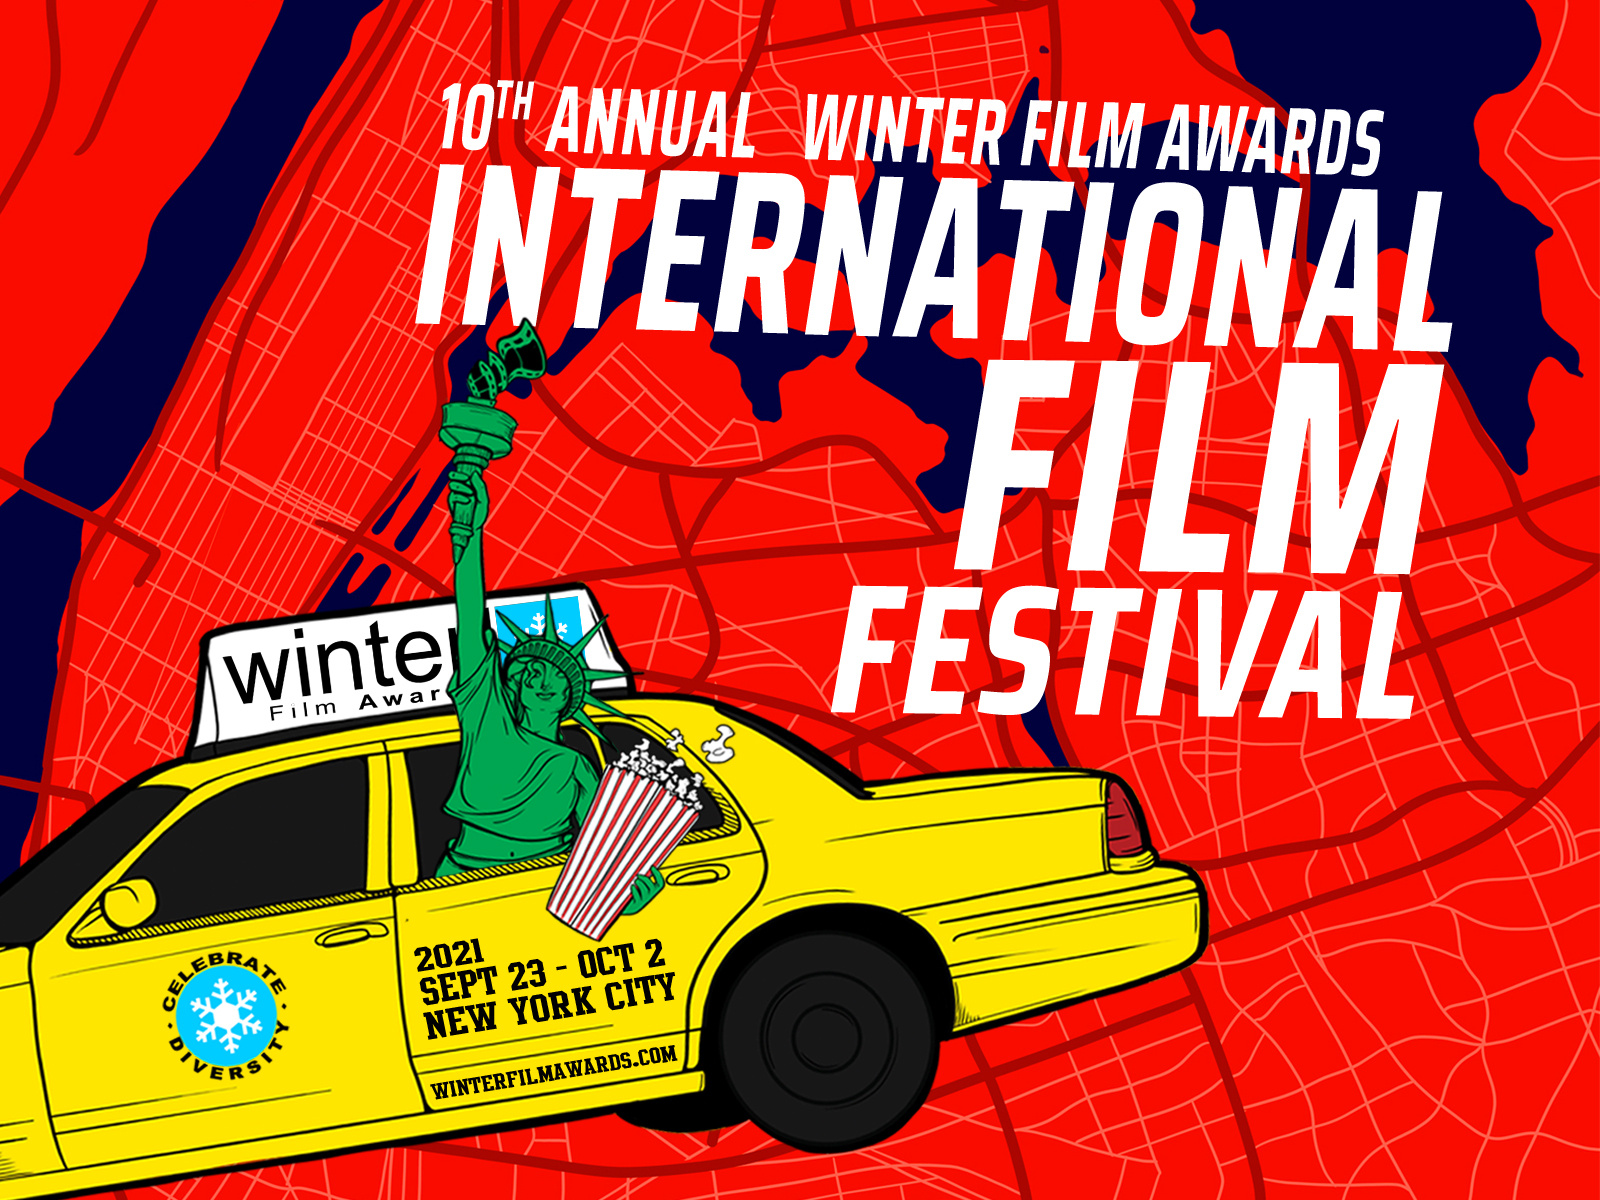 2021 Winter Film Awards International Film Festival Online